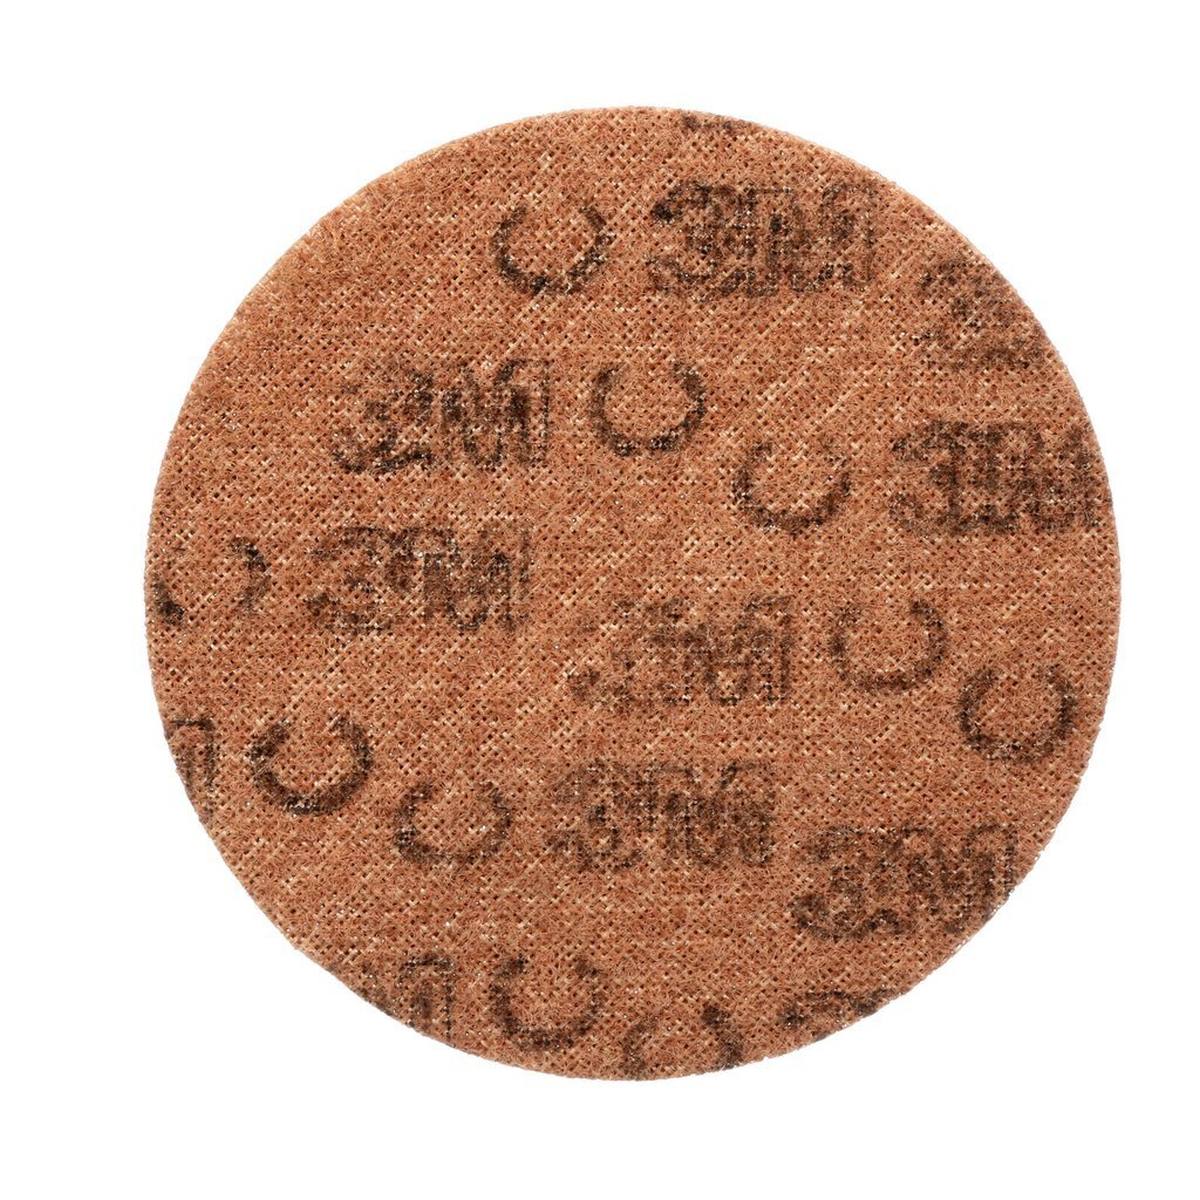 3M Scotch-Brite disco no tejido SC-DH sin centrar, marrón, 125 mm, A, grueso #65334